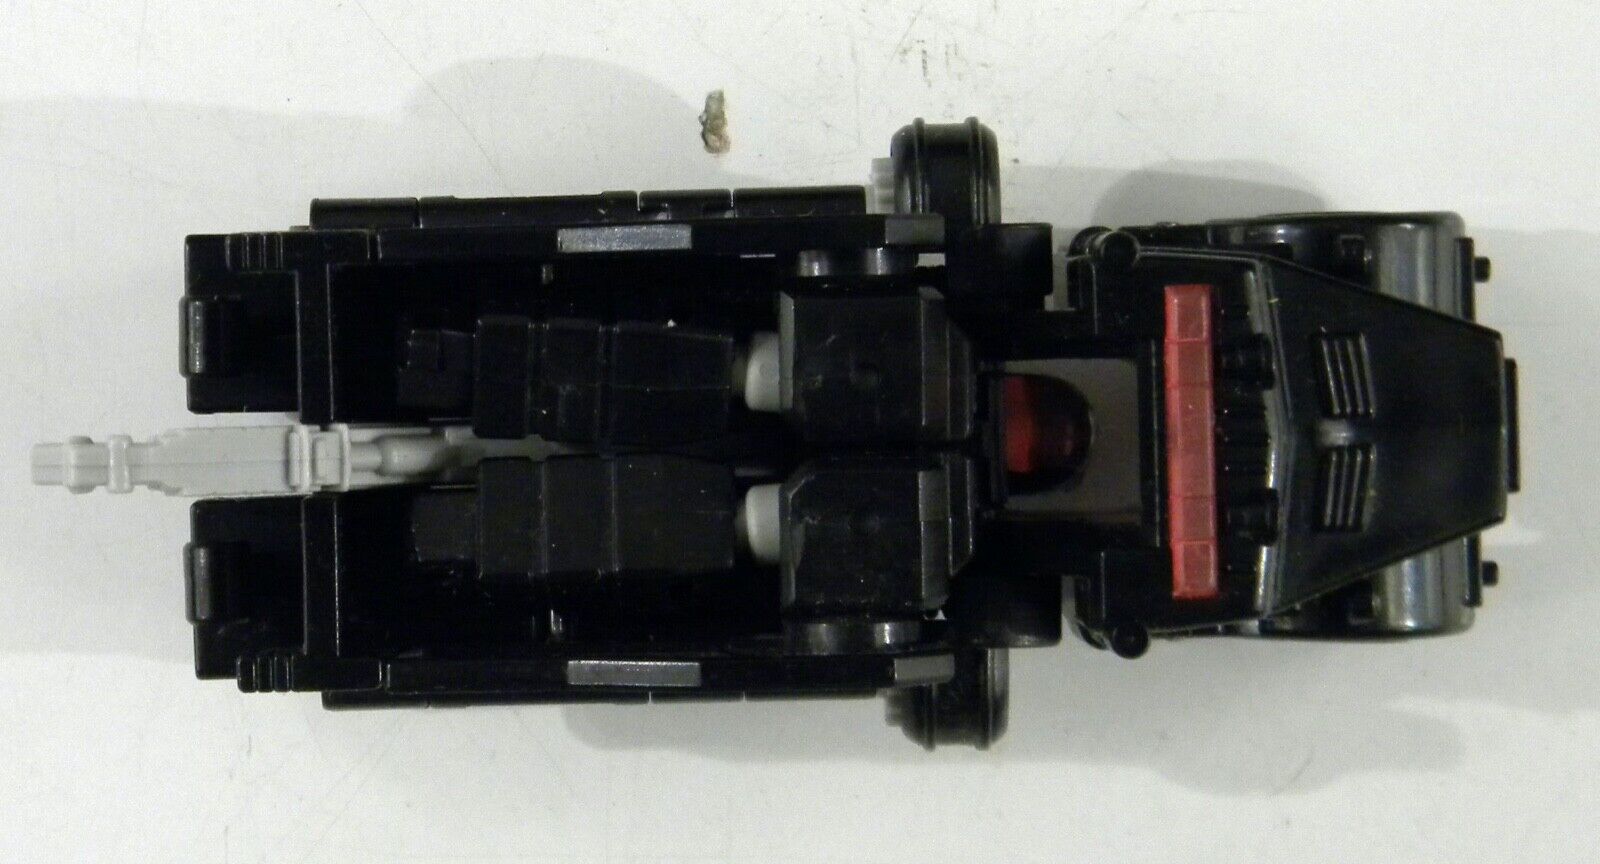 1996 Kenner Hasbro Machine Wars Transformers Hoist Prototype rare